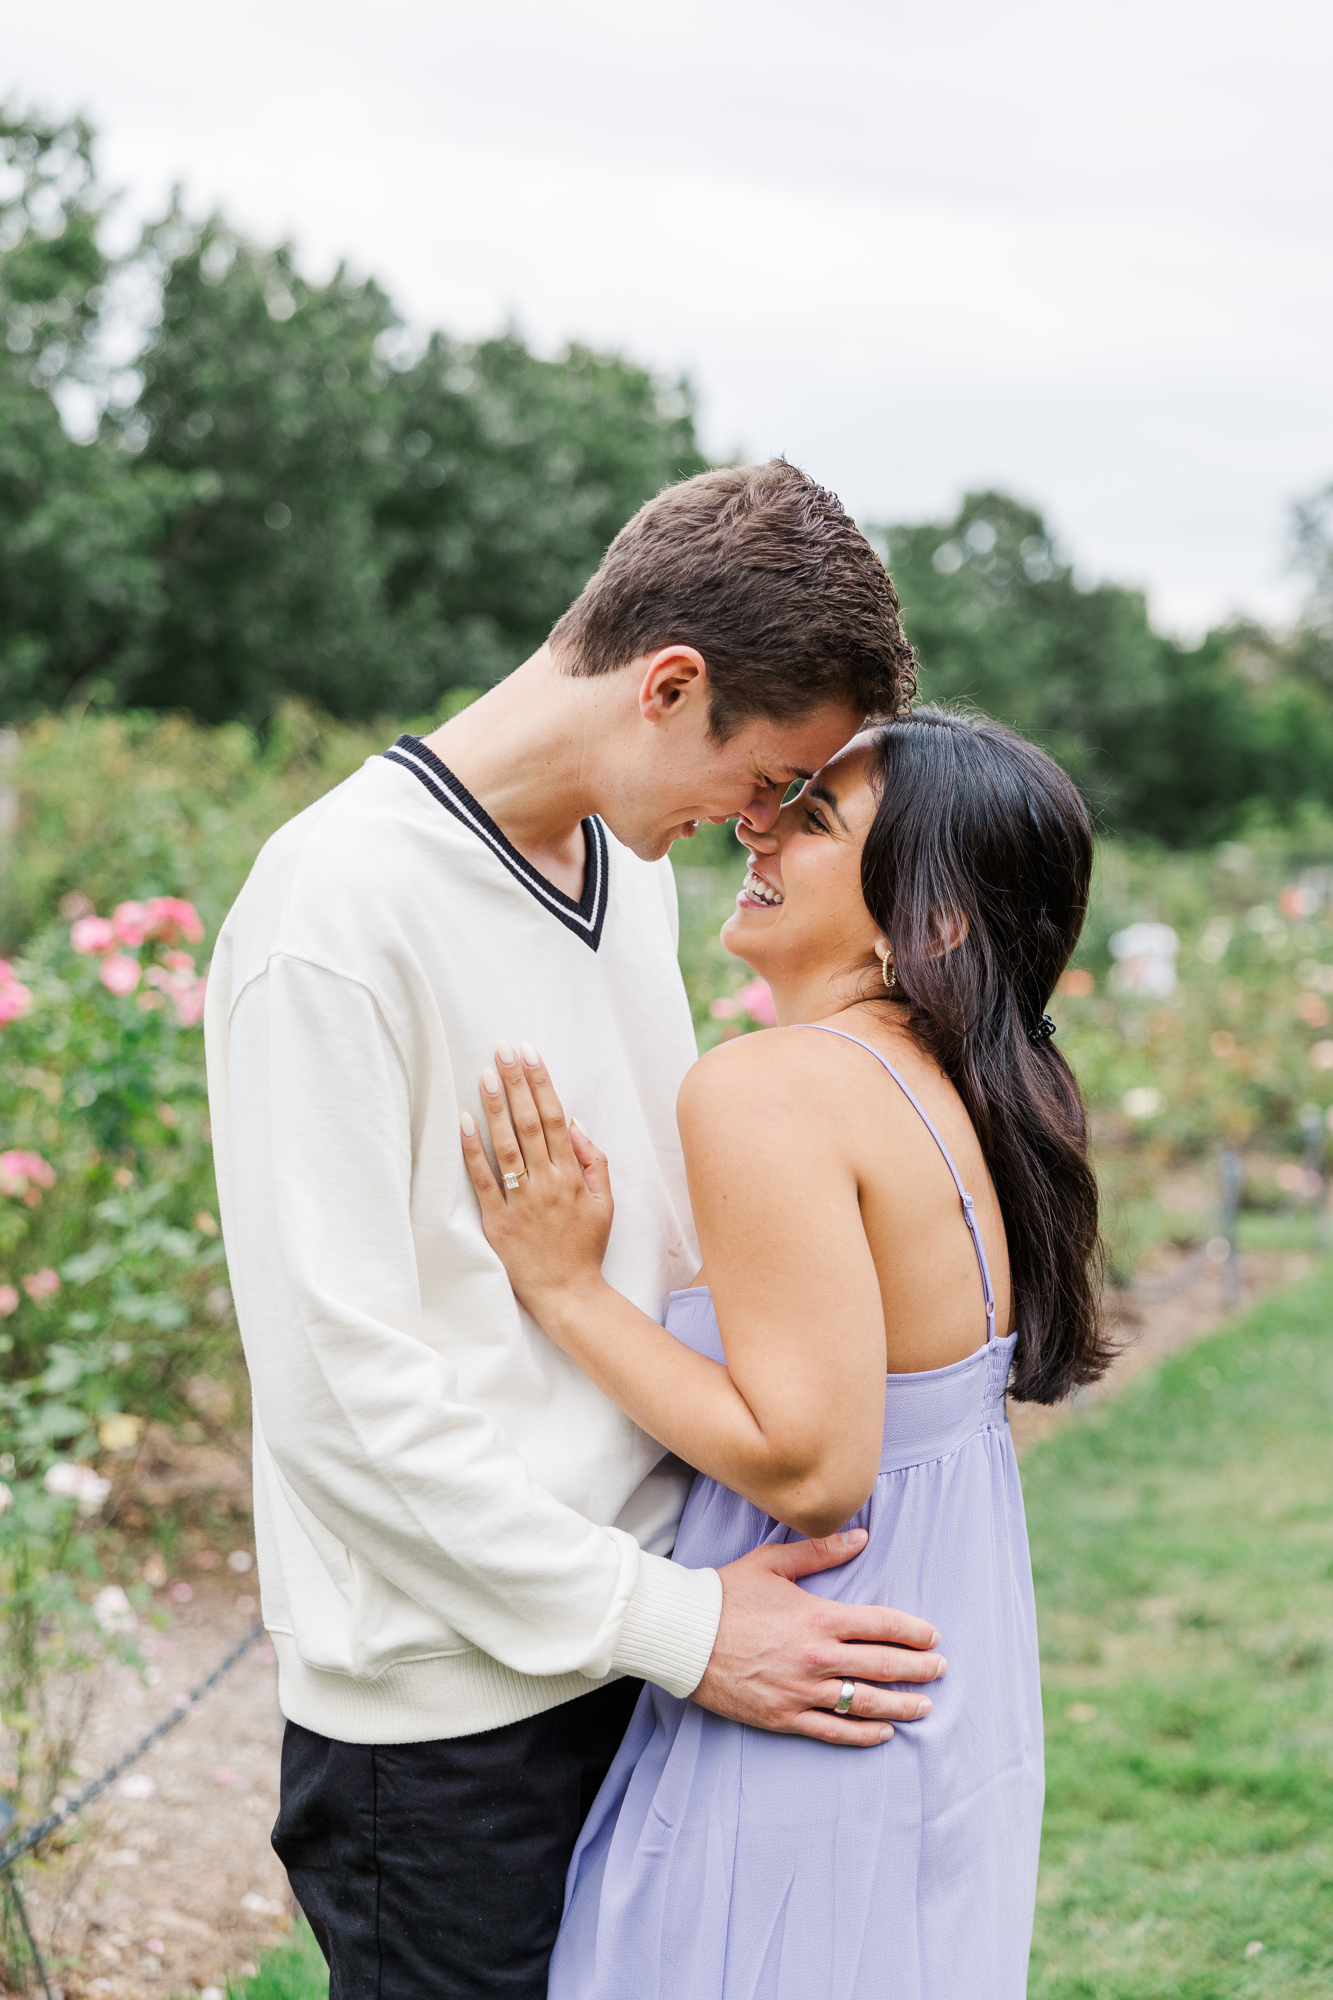 Romantic Proposal Photos in the Rose Garden at Brooklyn Botanic Garden